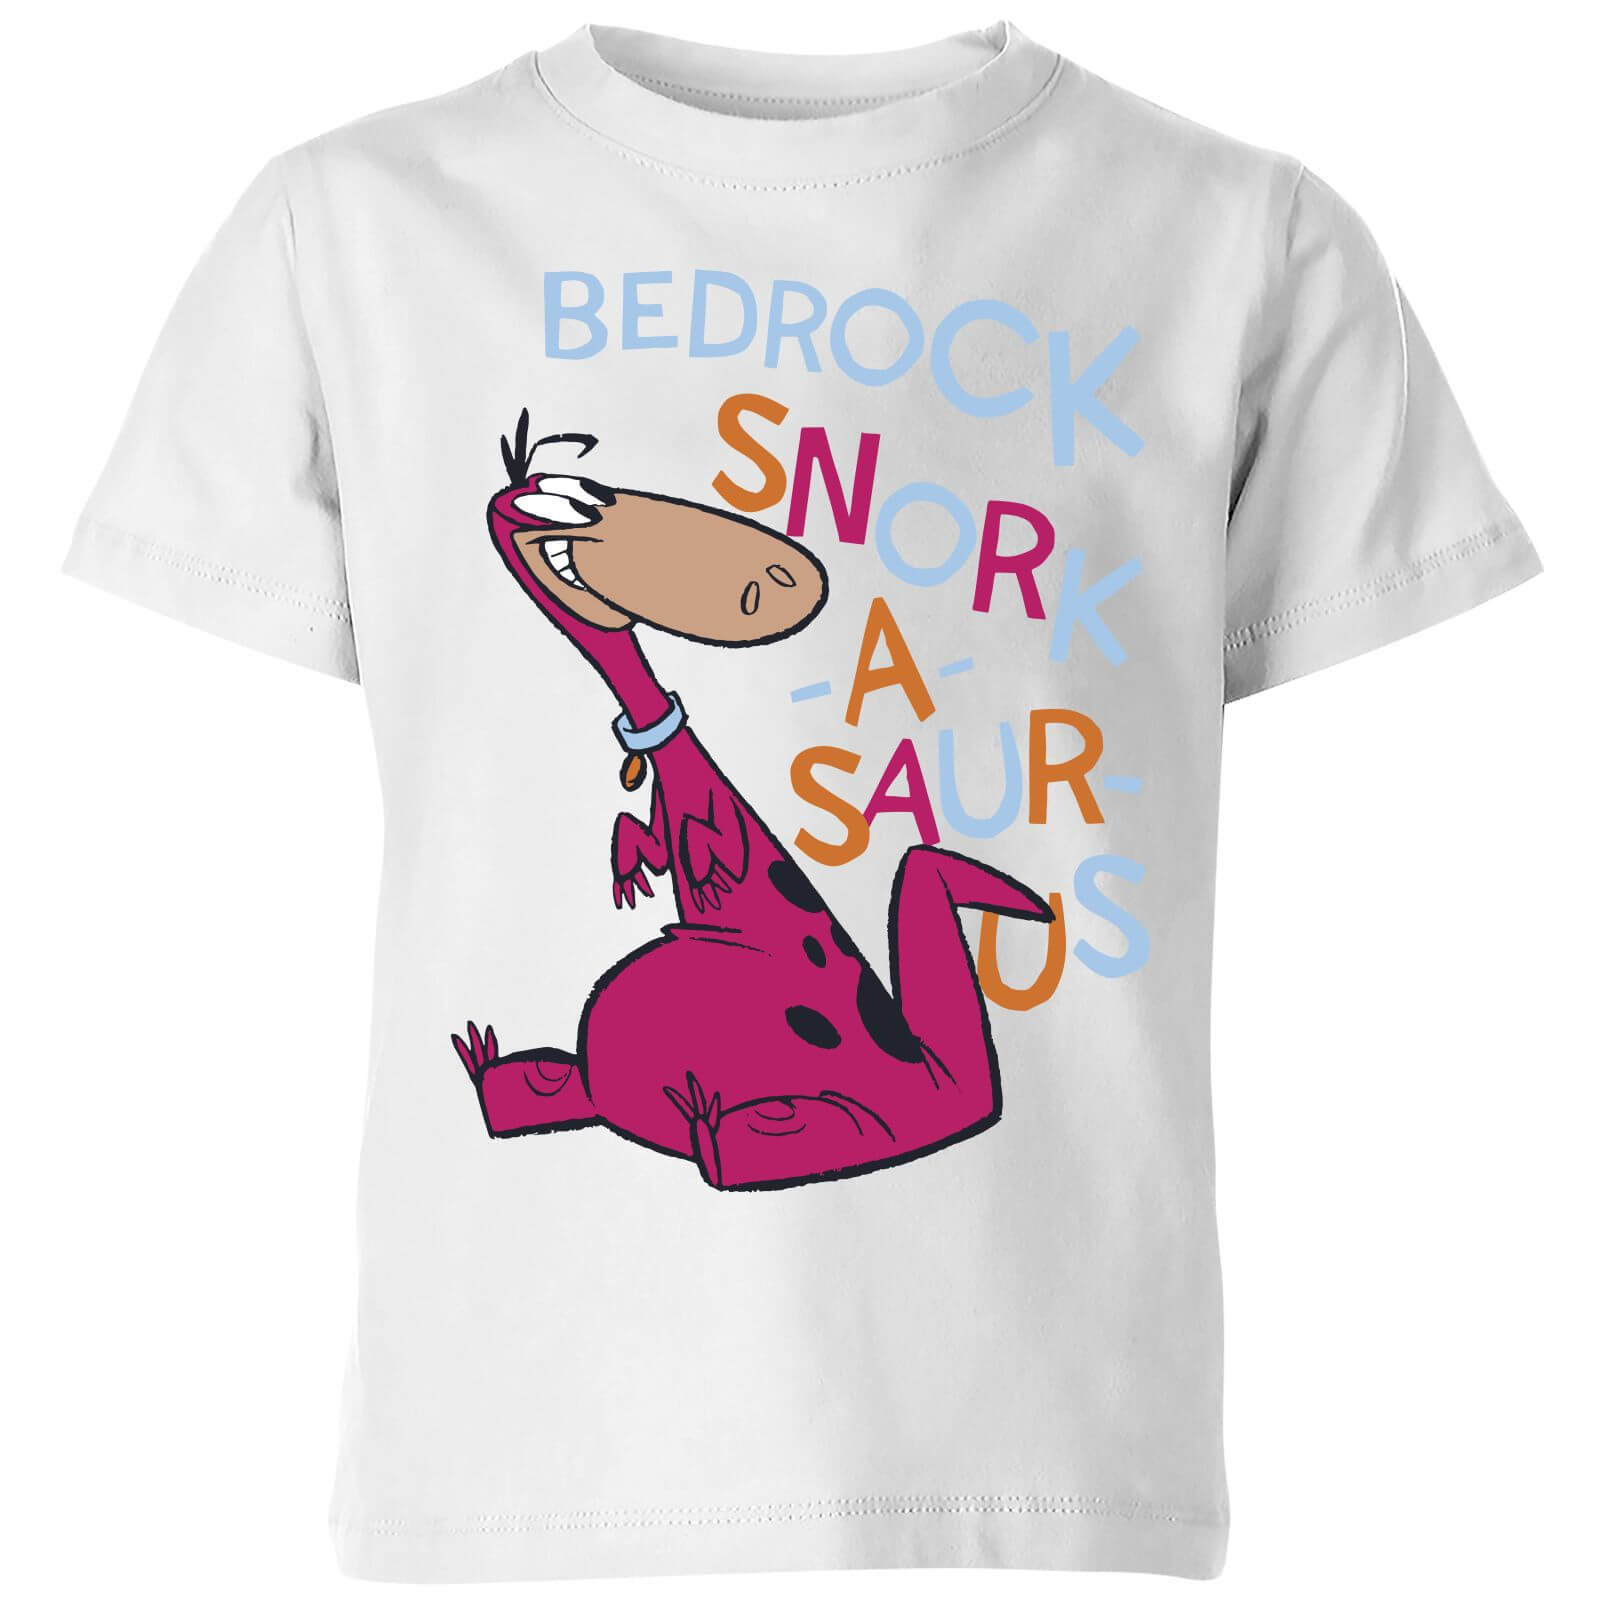 The Flintstones Bedrock Snork-A-Saur-Us Kids' T-Shirt - White - 146/152 (11-12 jaar) - Wit